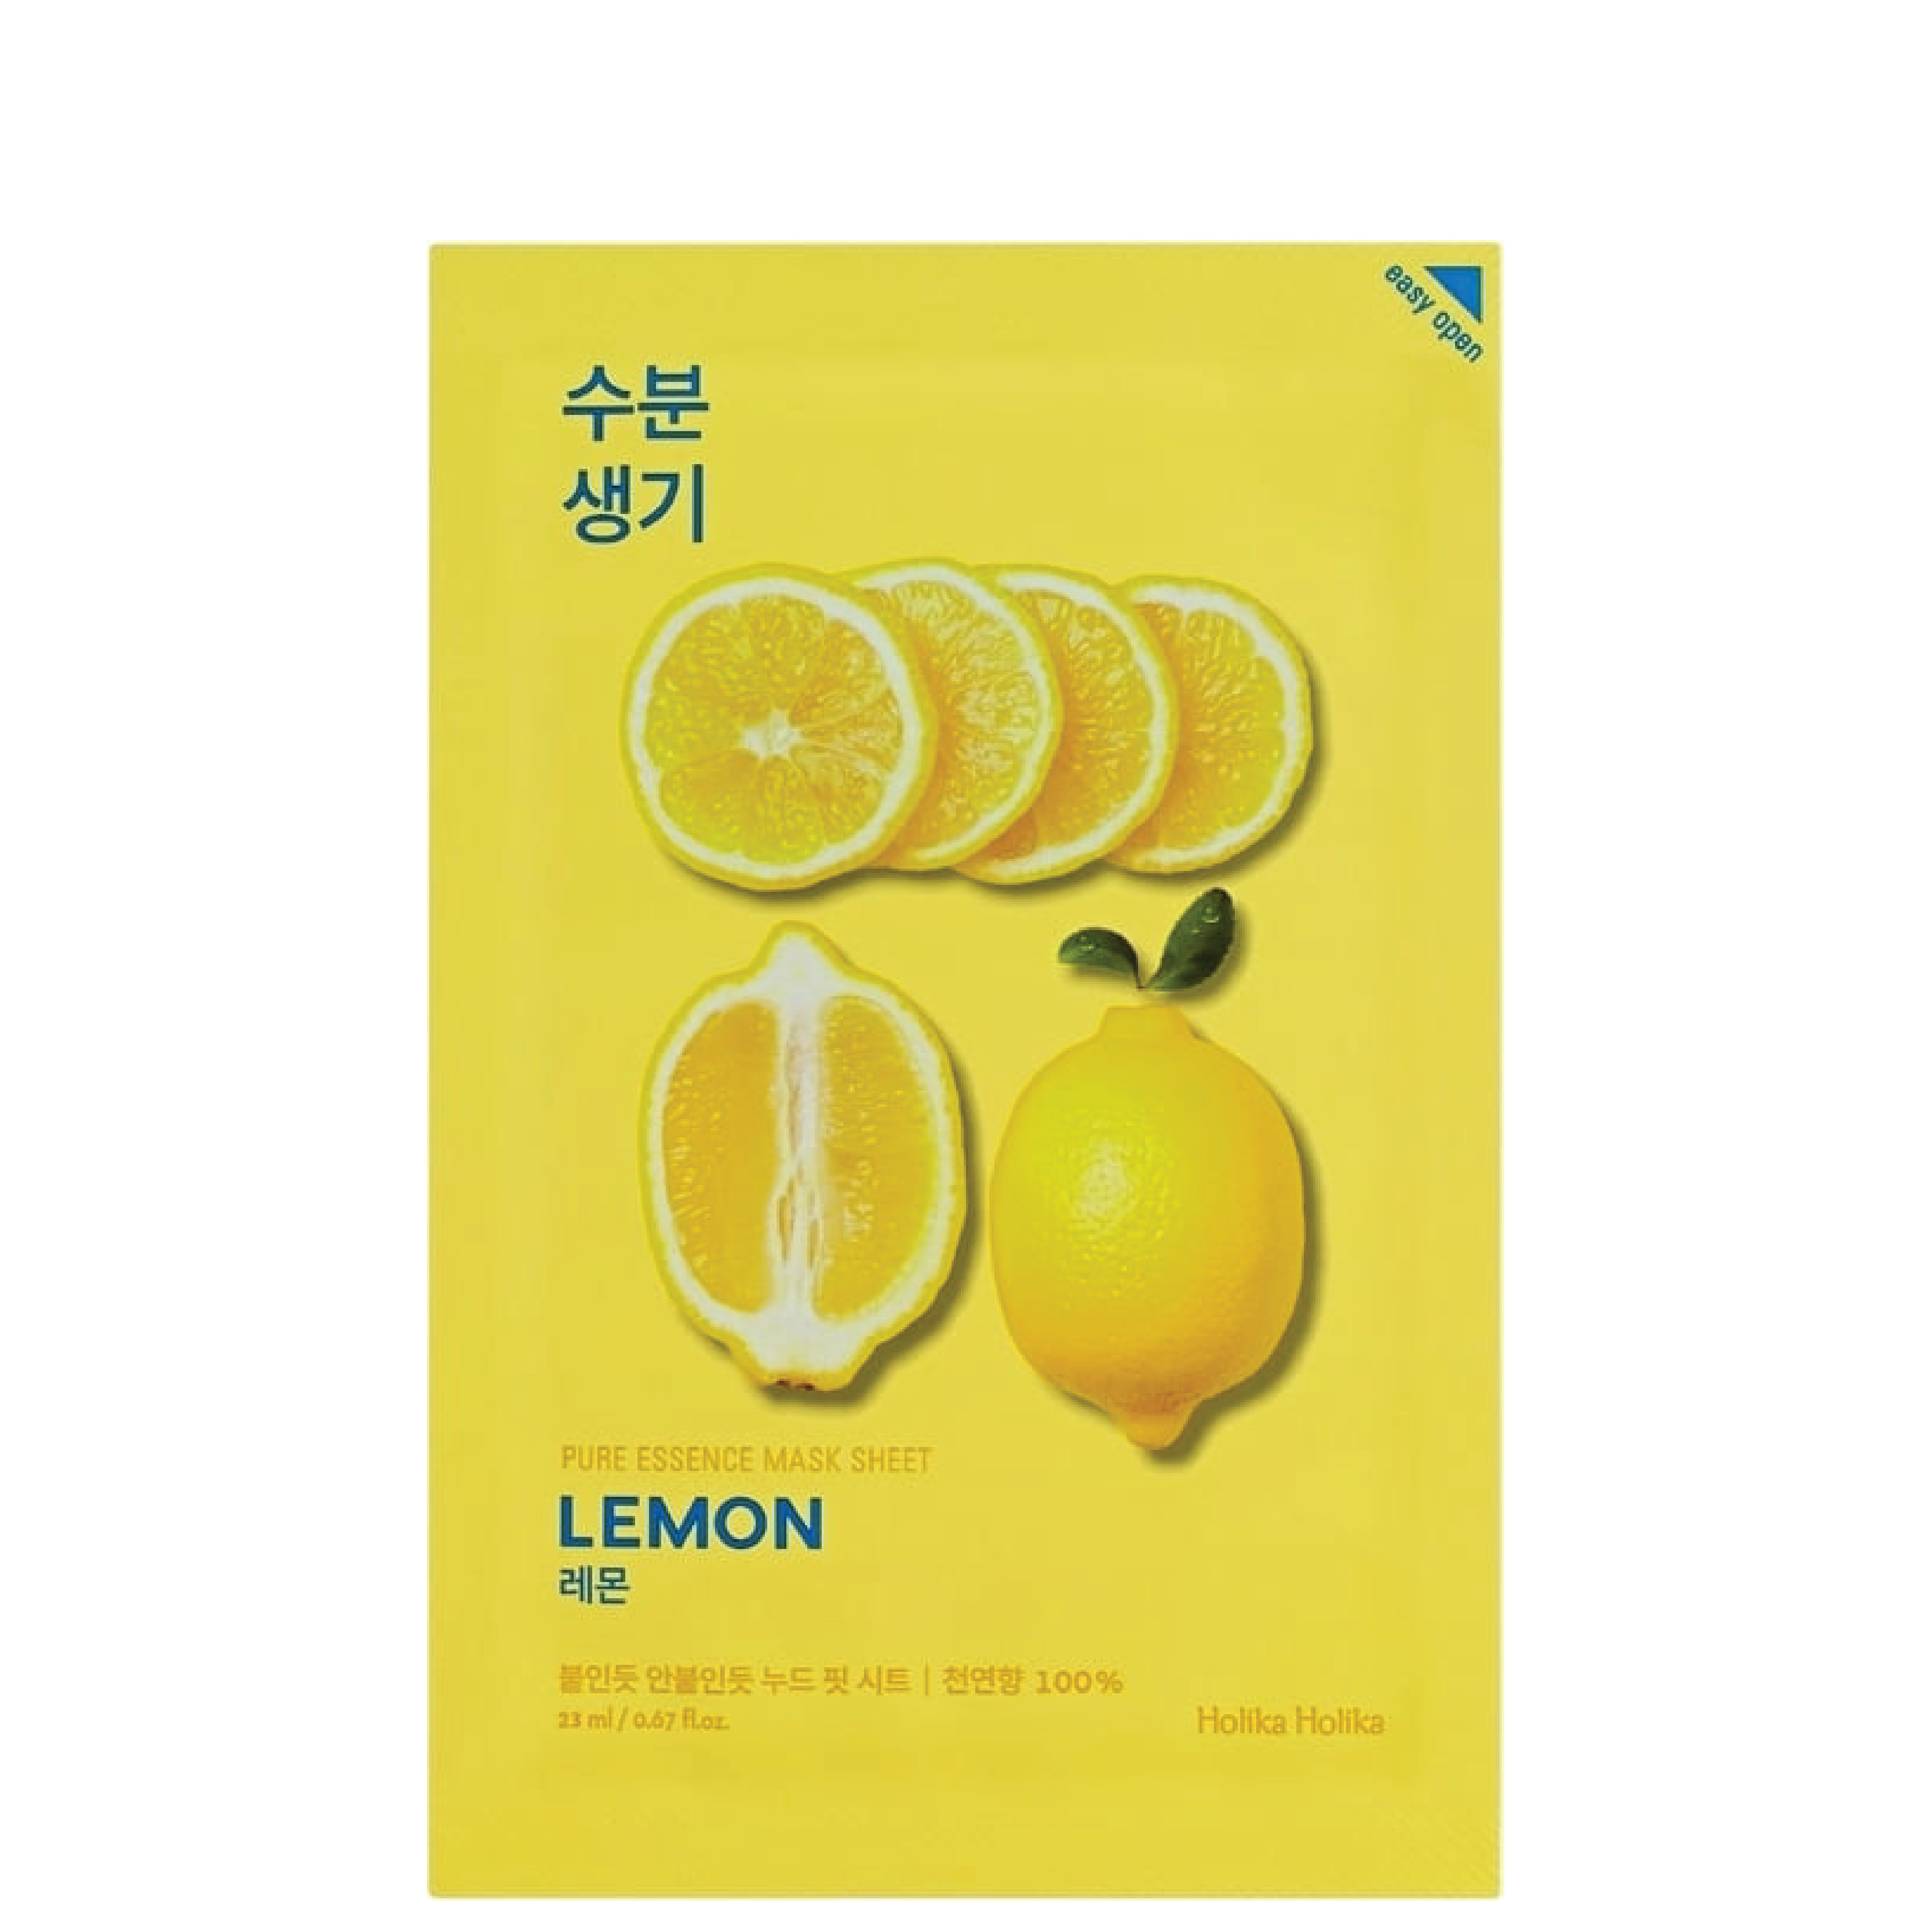 Holika Holika Lemon Pure Essence Mask